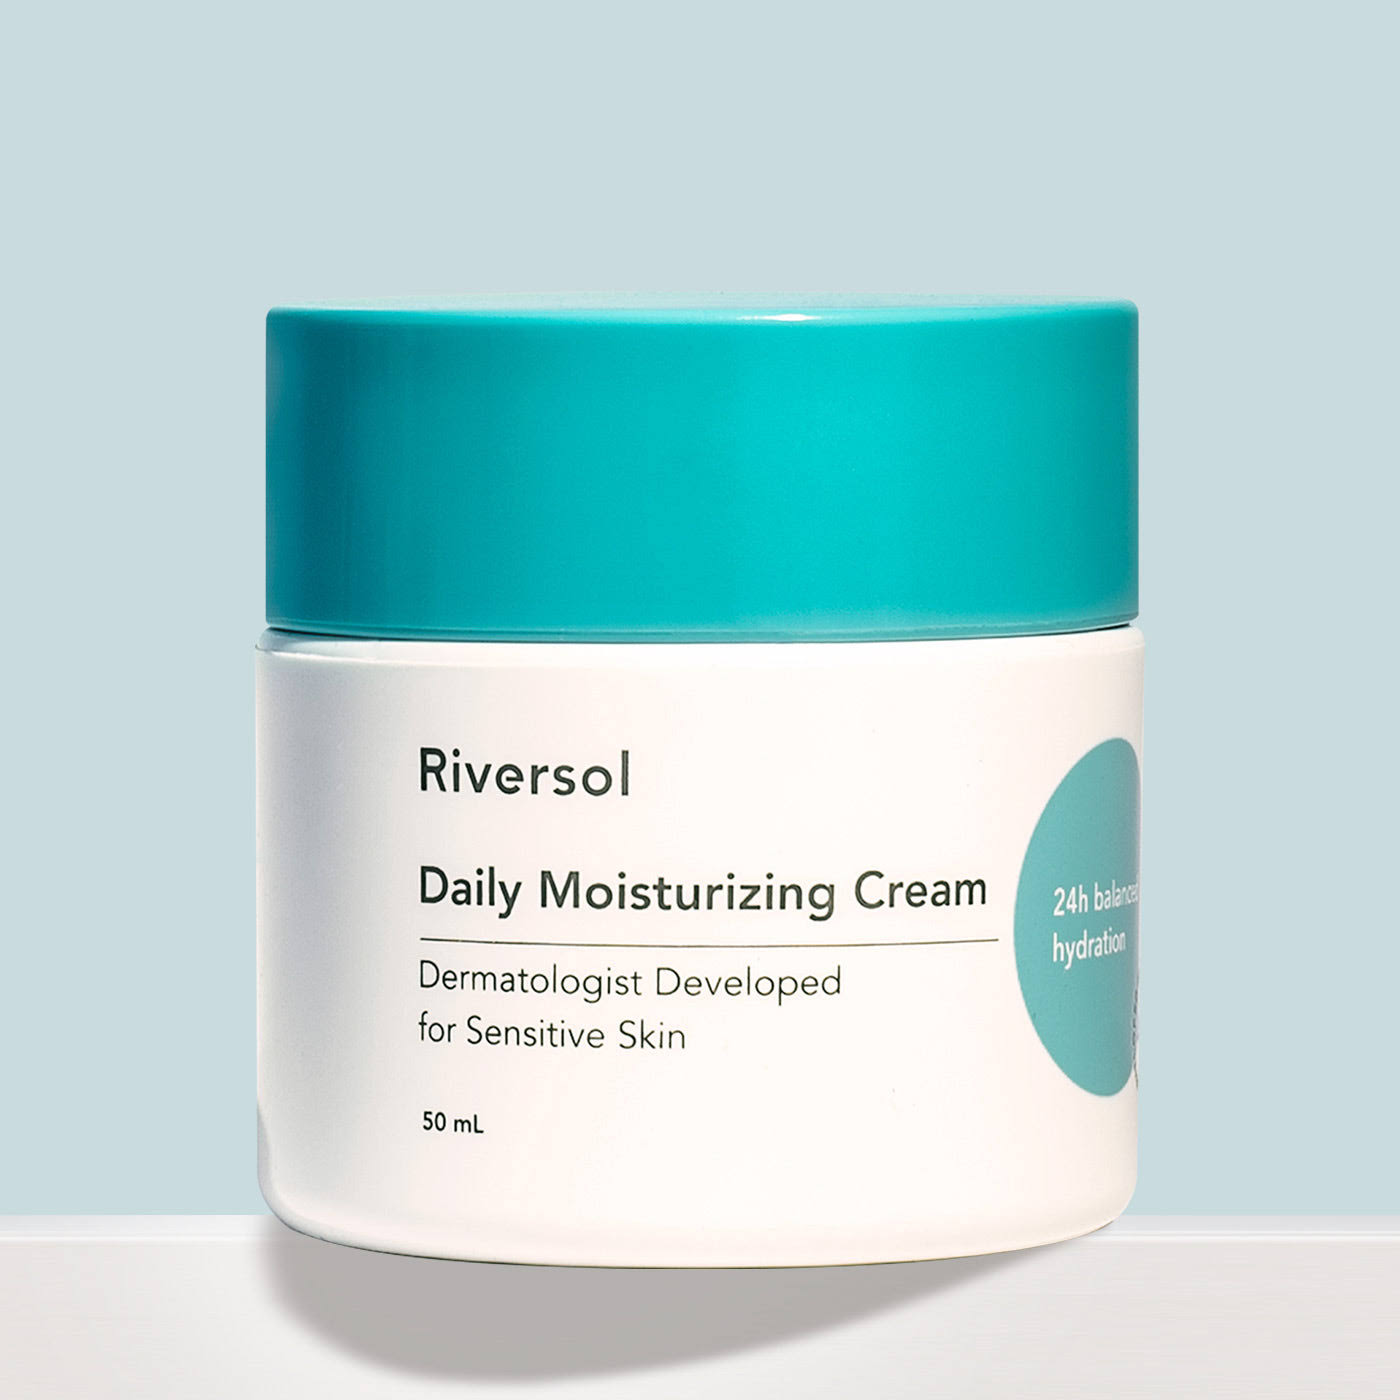 Riversol Daily Moisturizing Cream